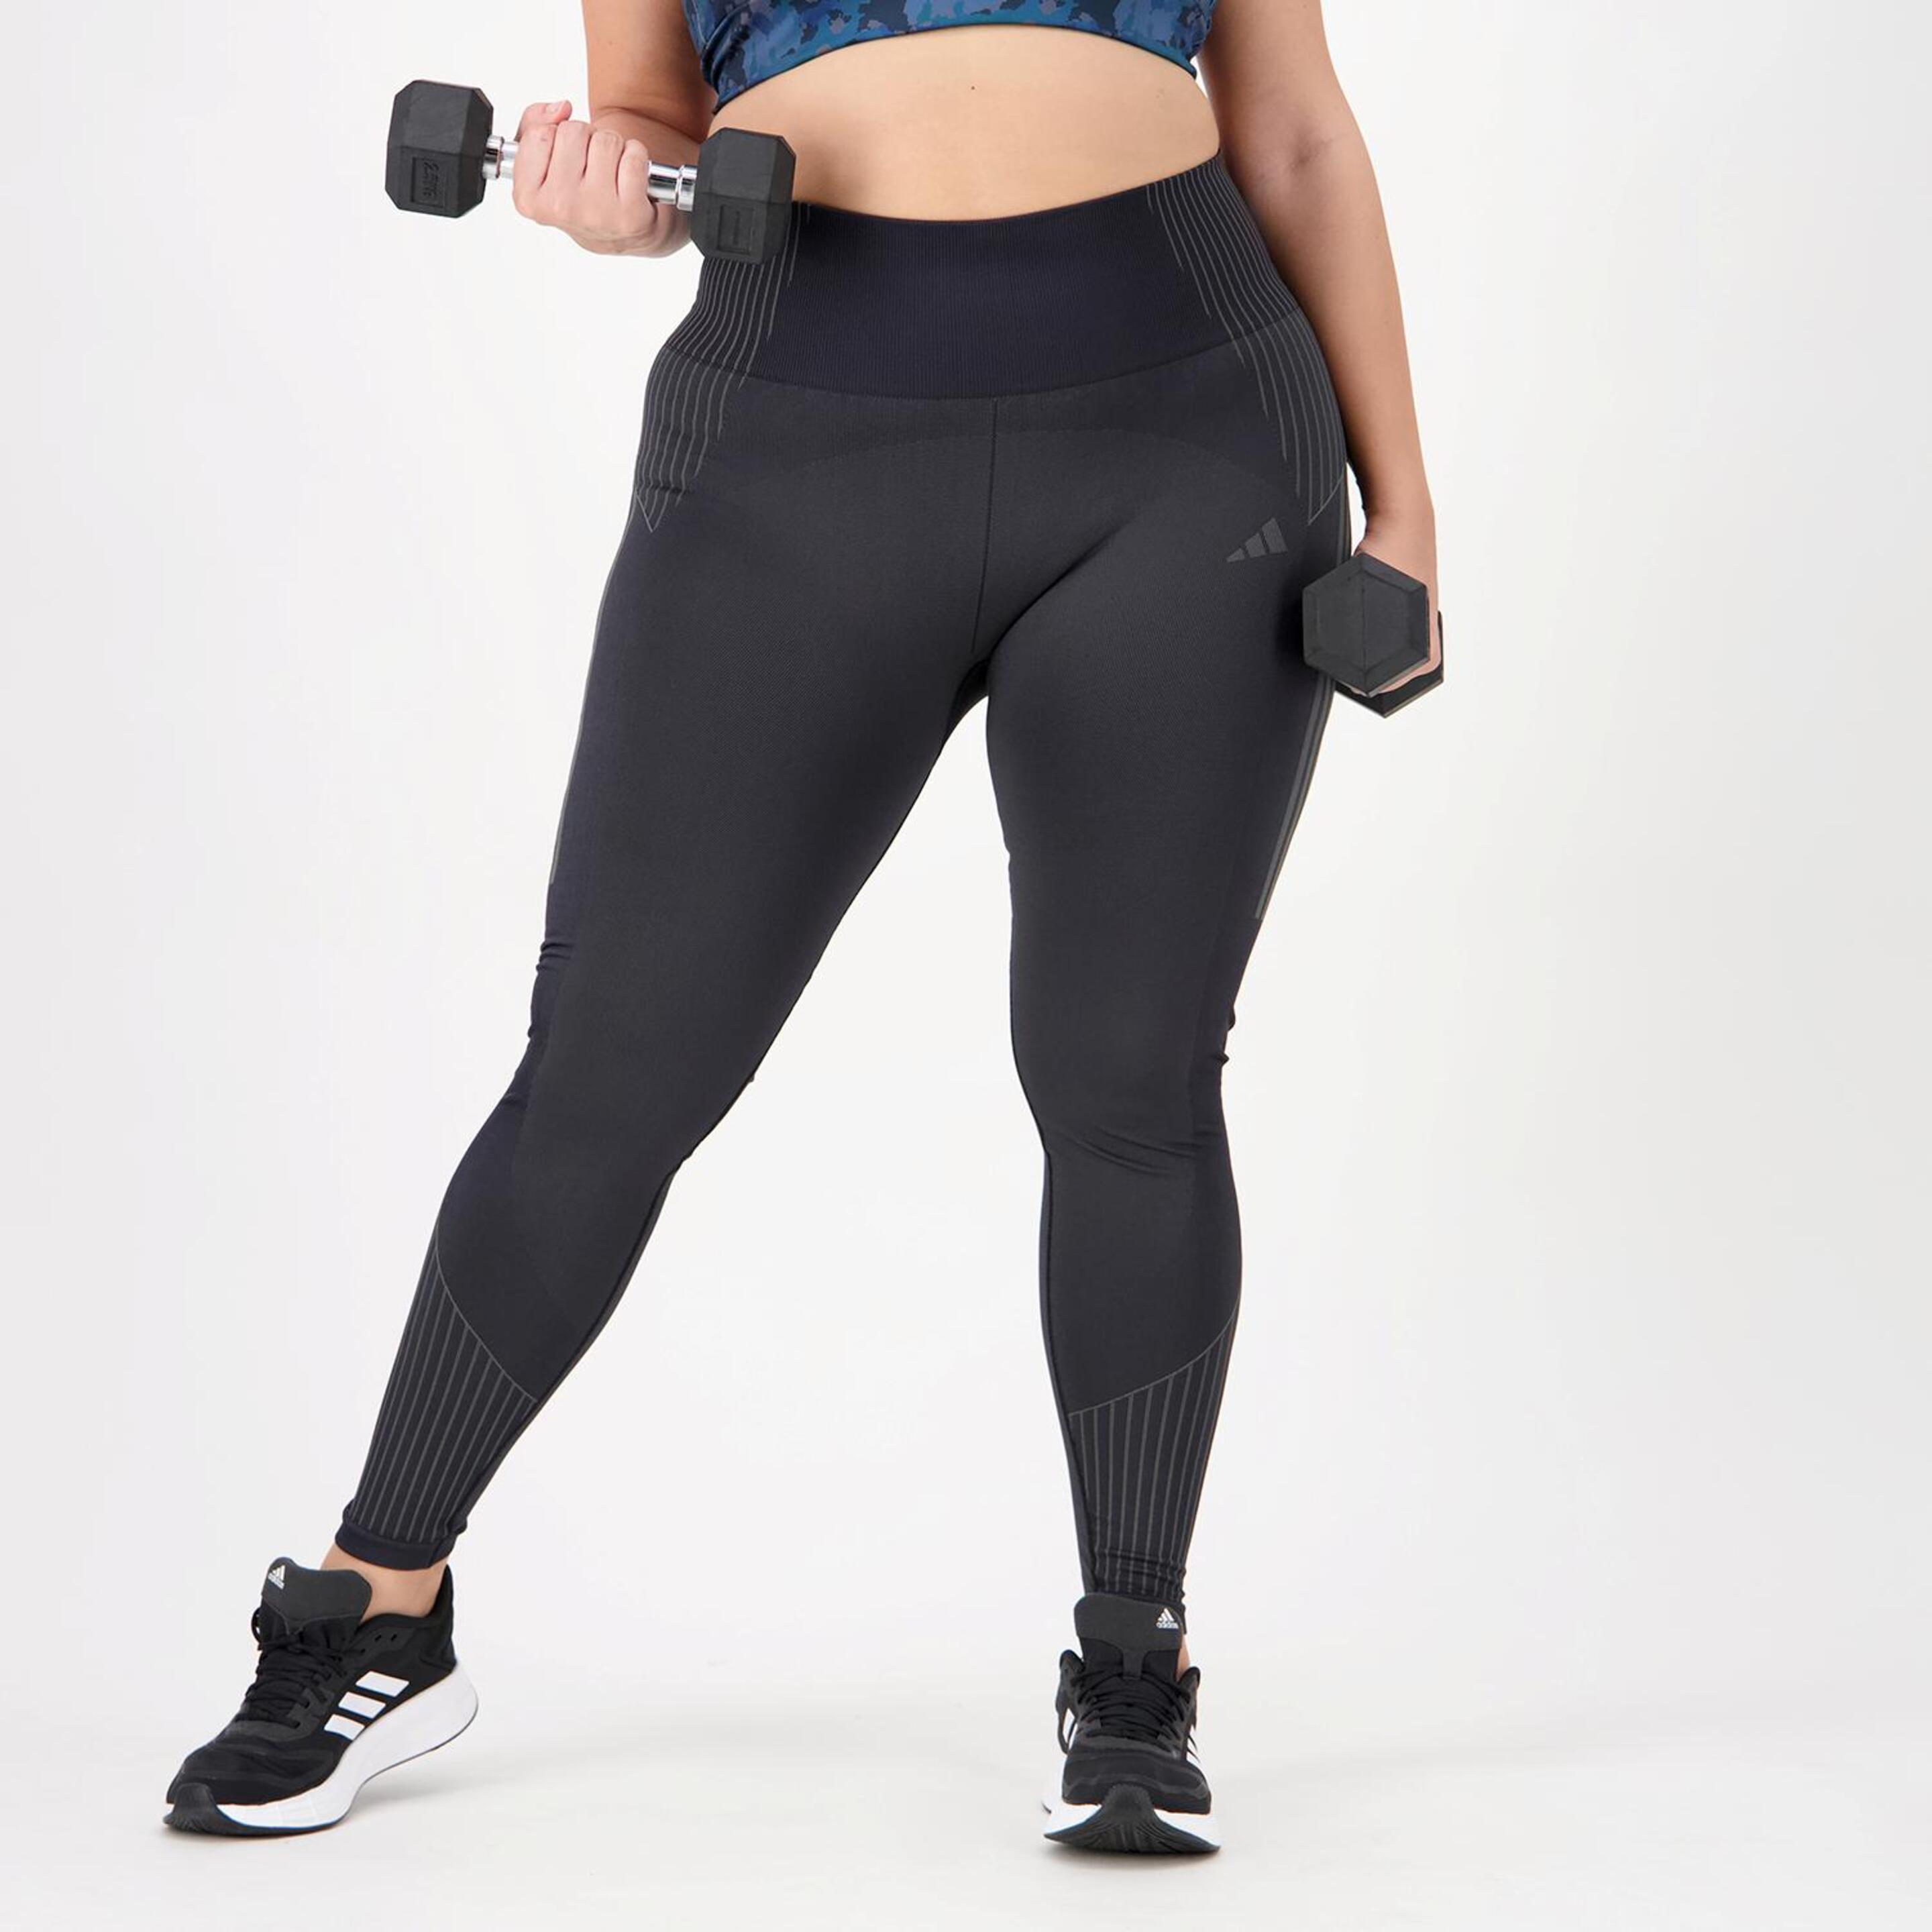 Mallas Largas adidas - negro - Leggings Fitness Mujer